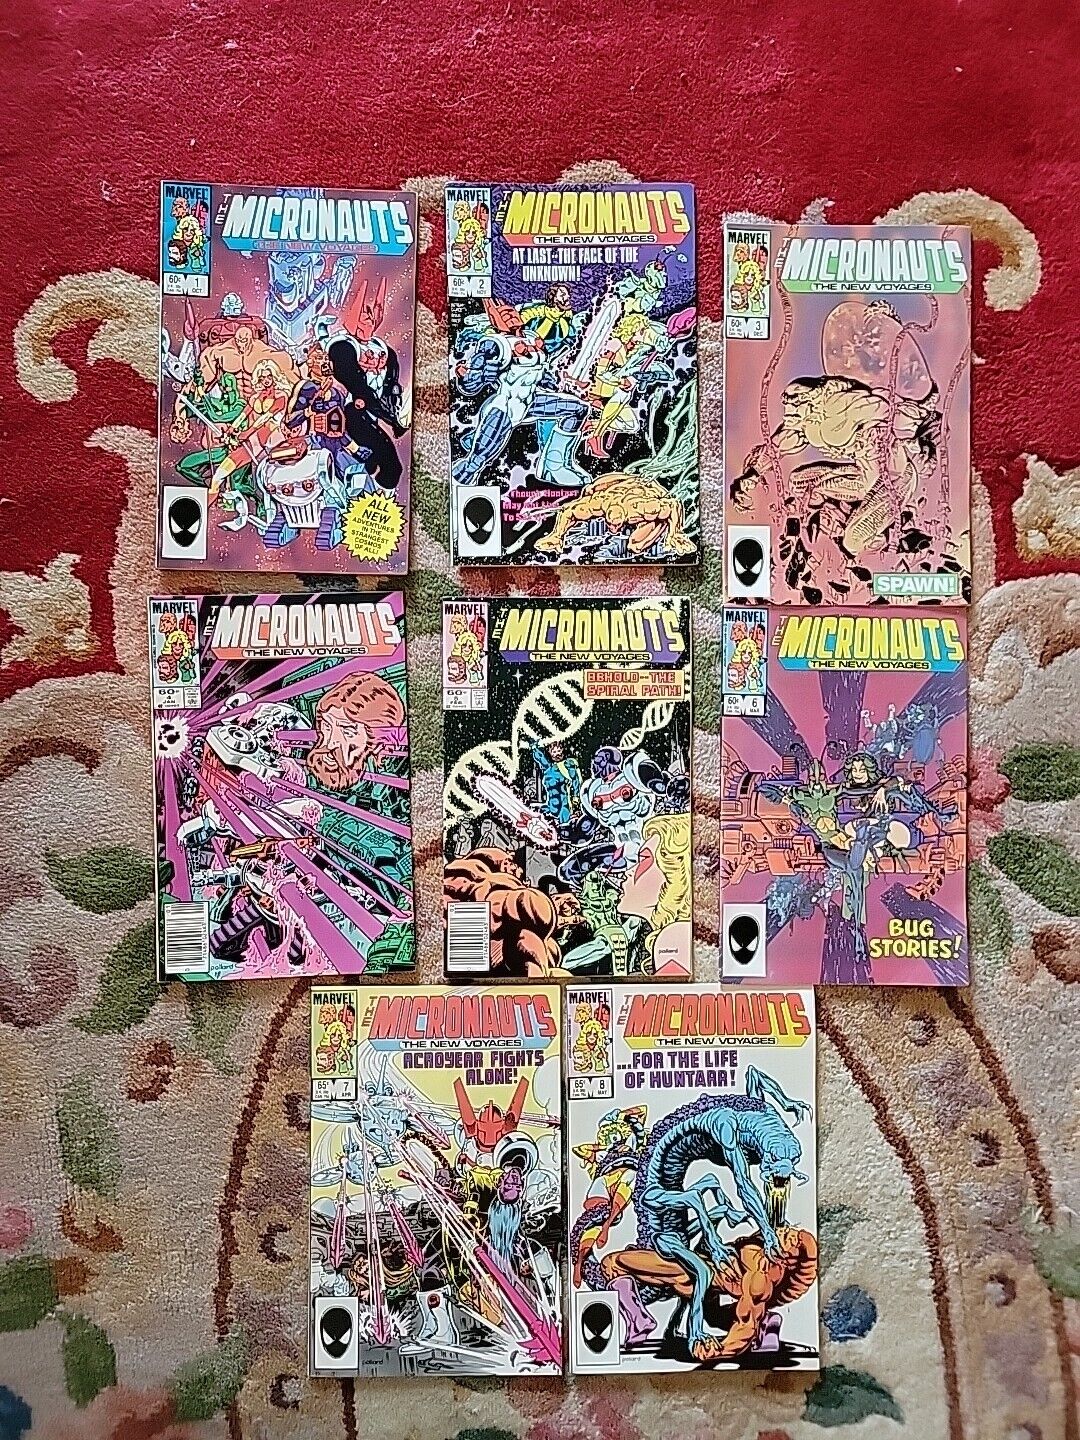 The Micronauts Vol 2 #1 2,3,4,5,6,7,8 Marve Comics Lot Near Mint Condition